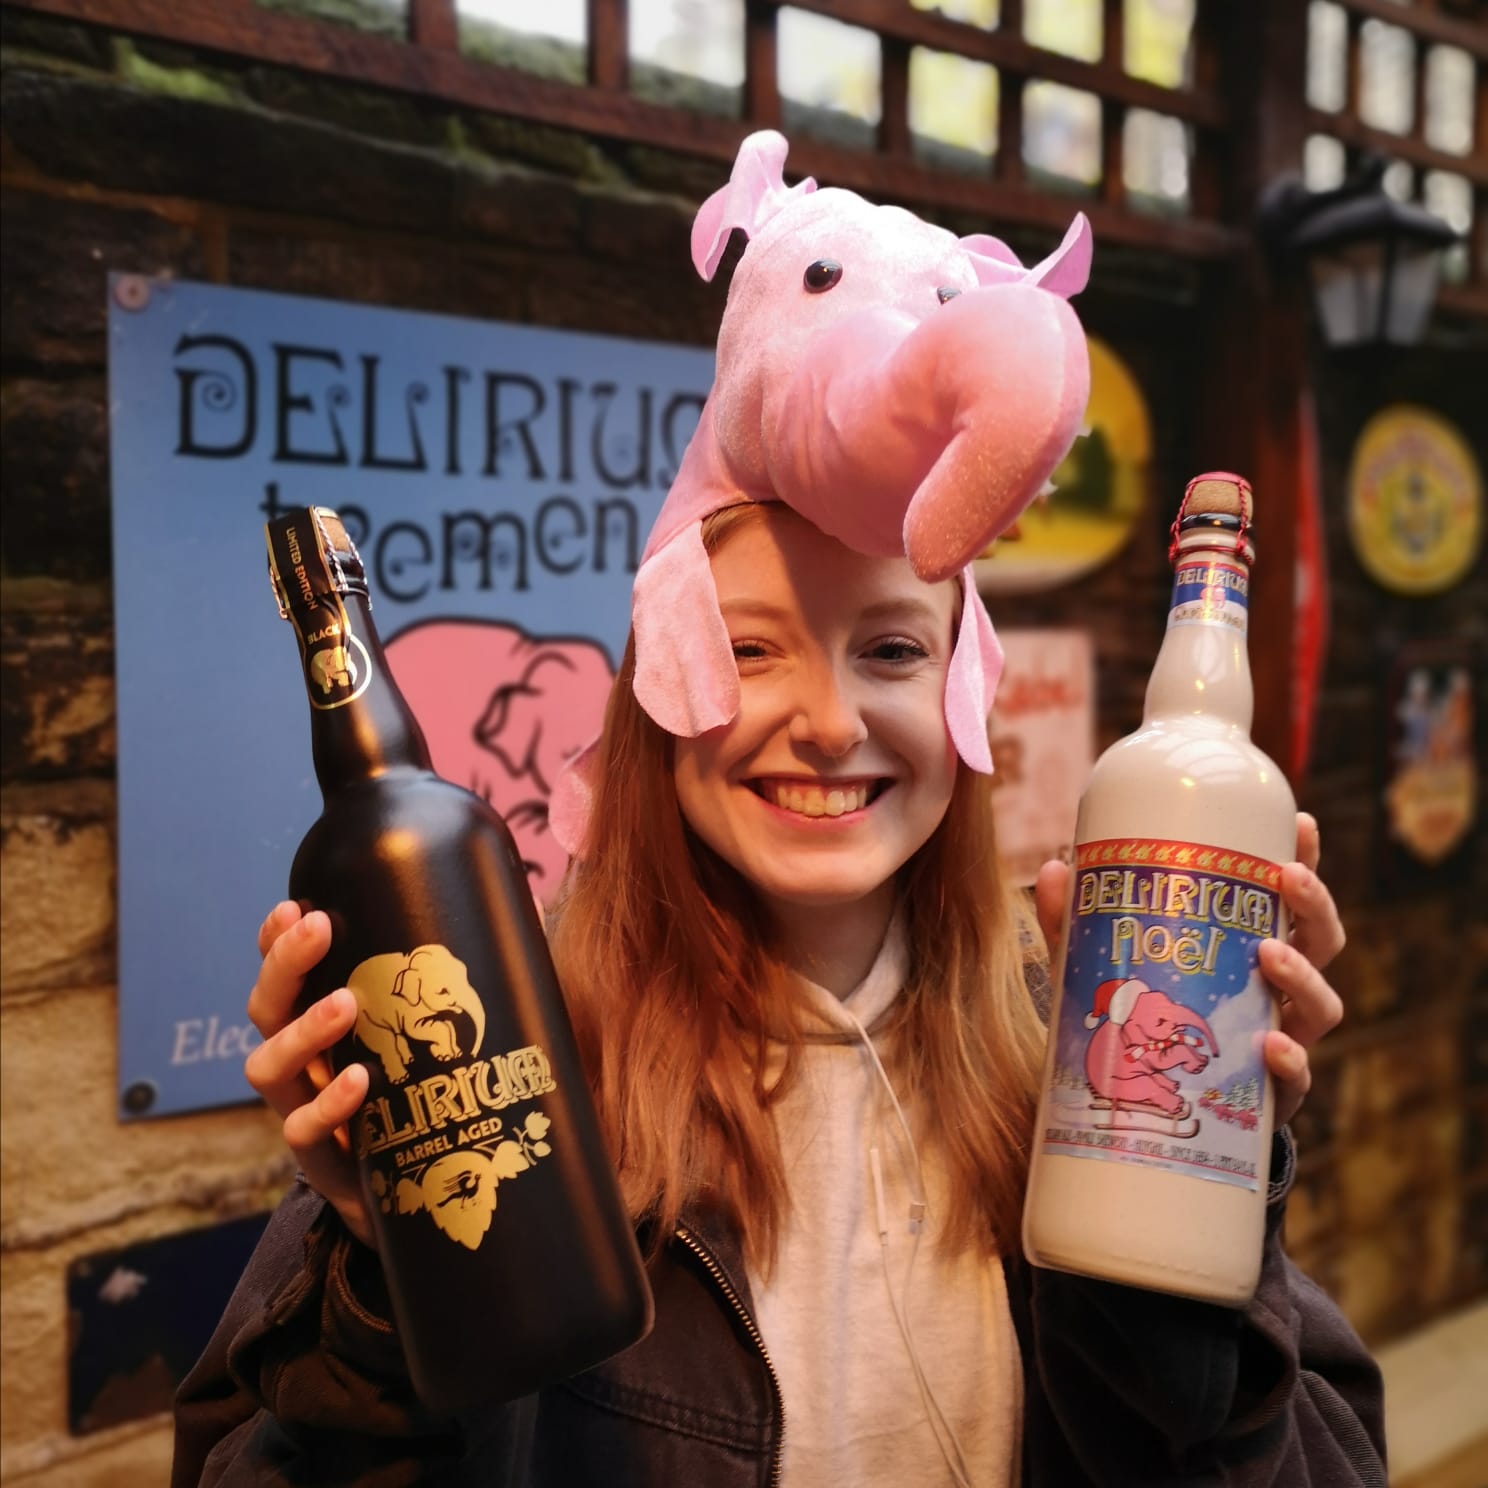 We’re going Delirious for Belgian Beer: Delirium Day is coming!